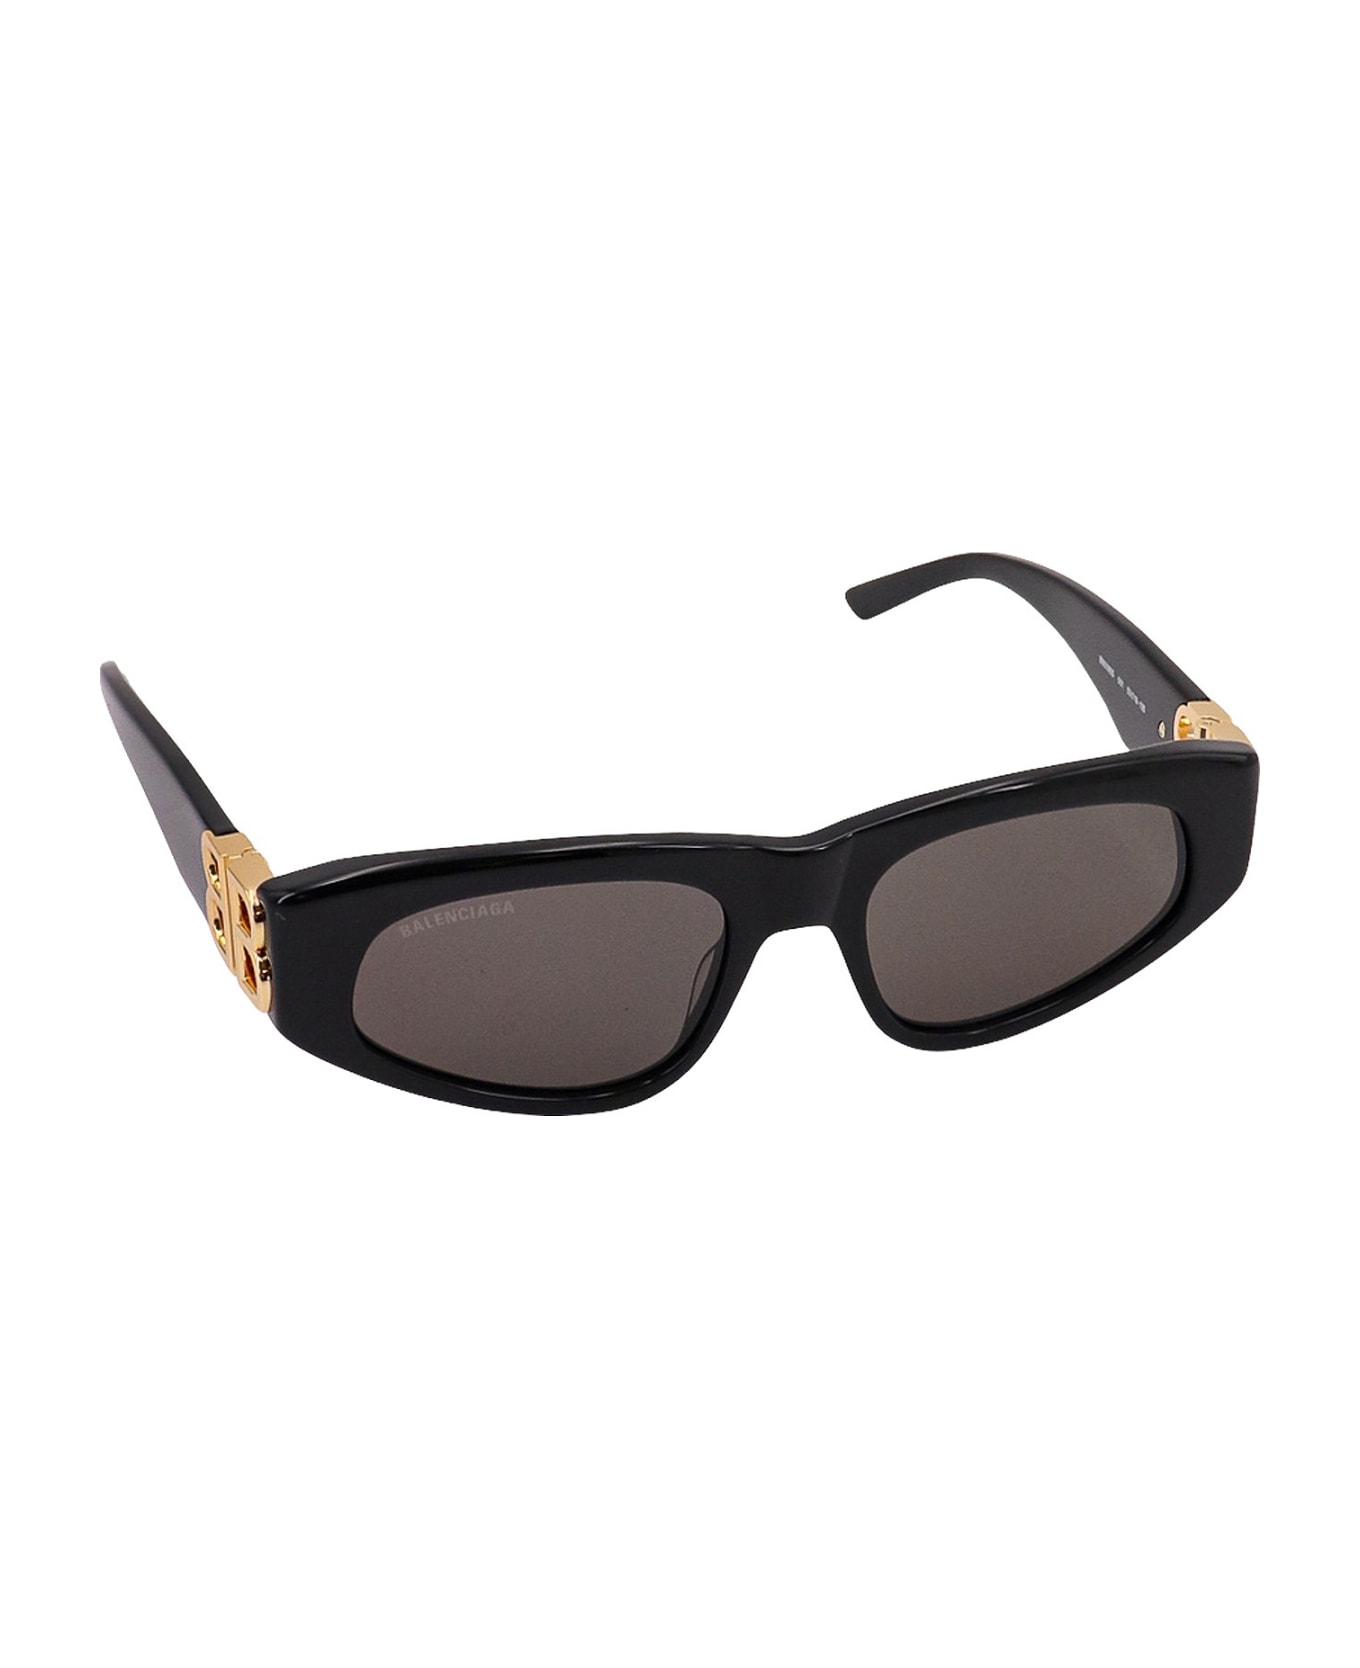 Balenciaga Eyewear Dinasty D-frame Sunglasses - Black サングラス